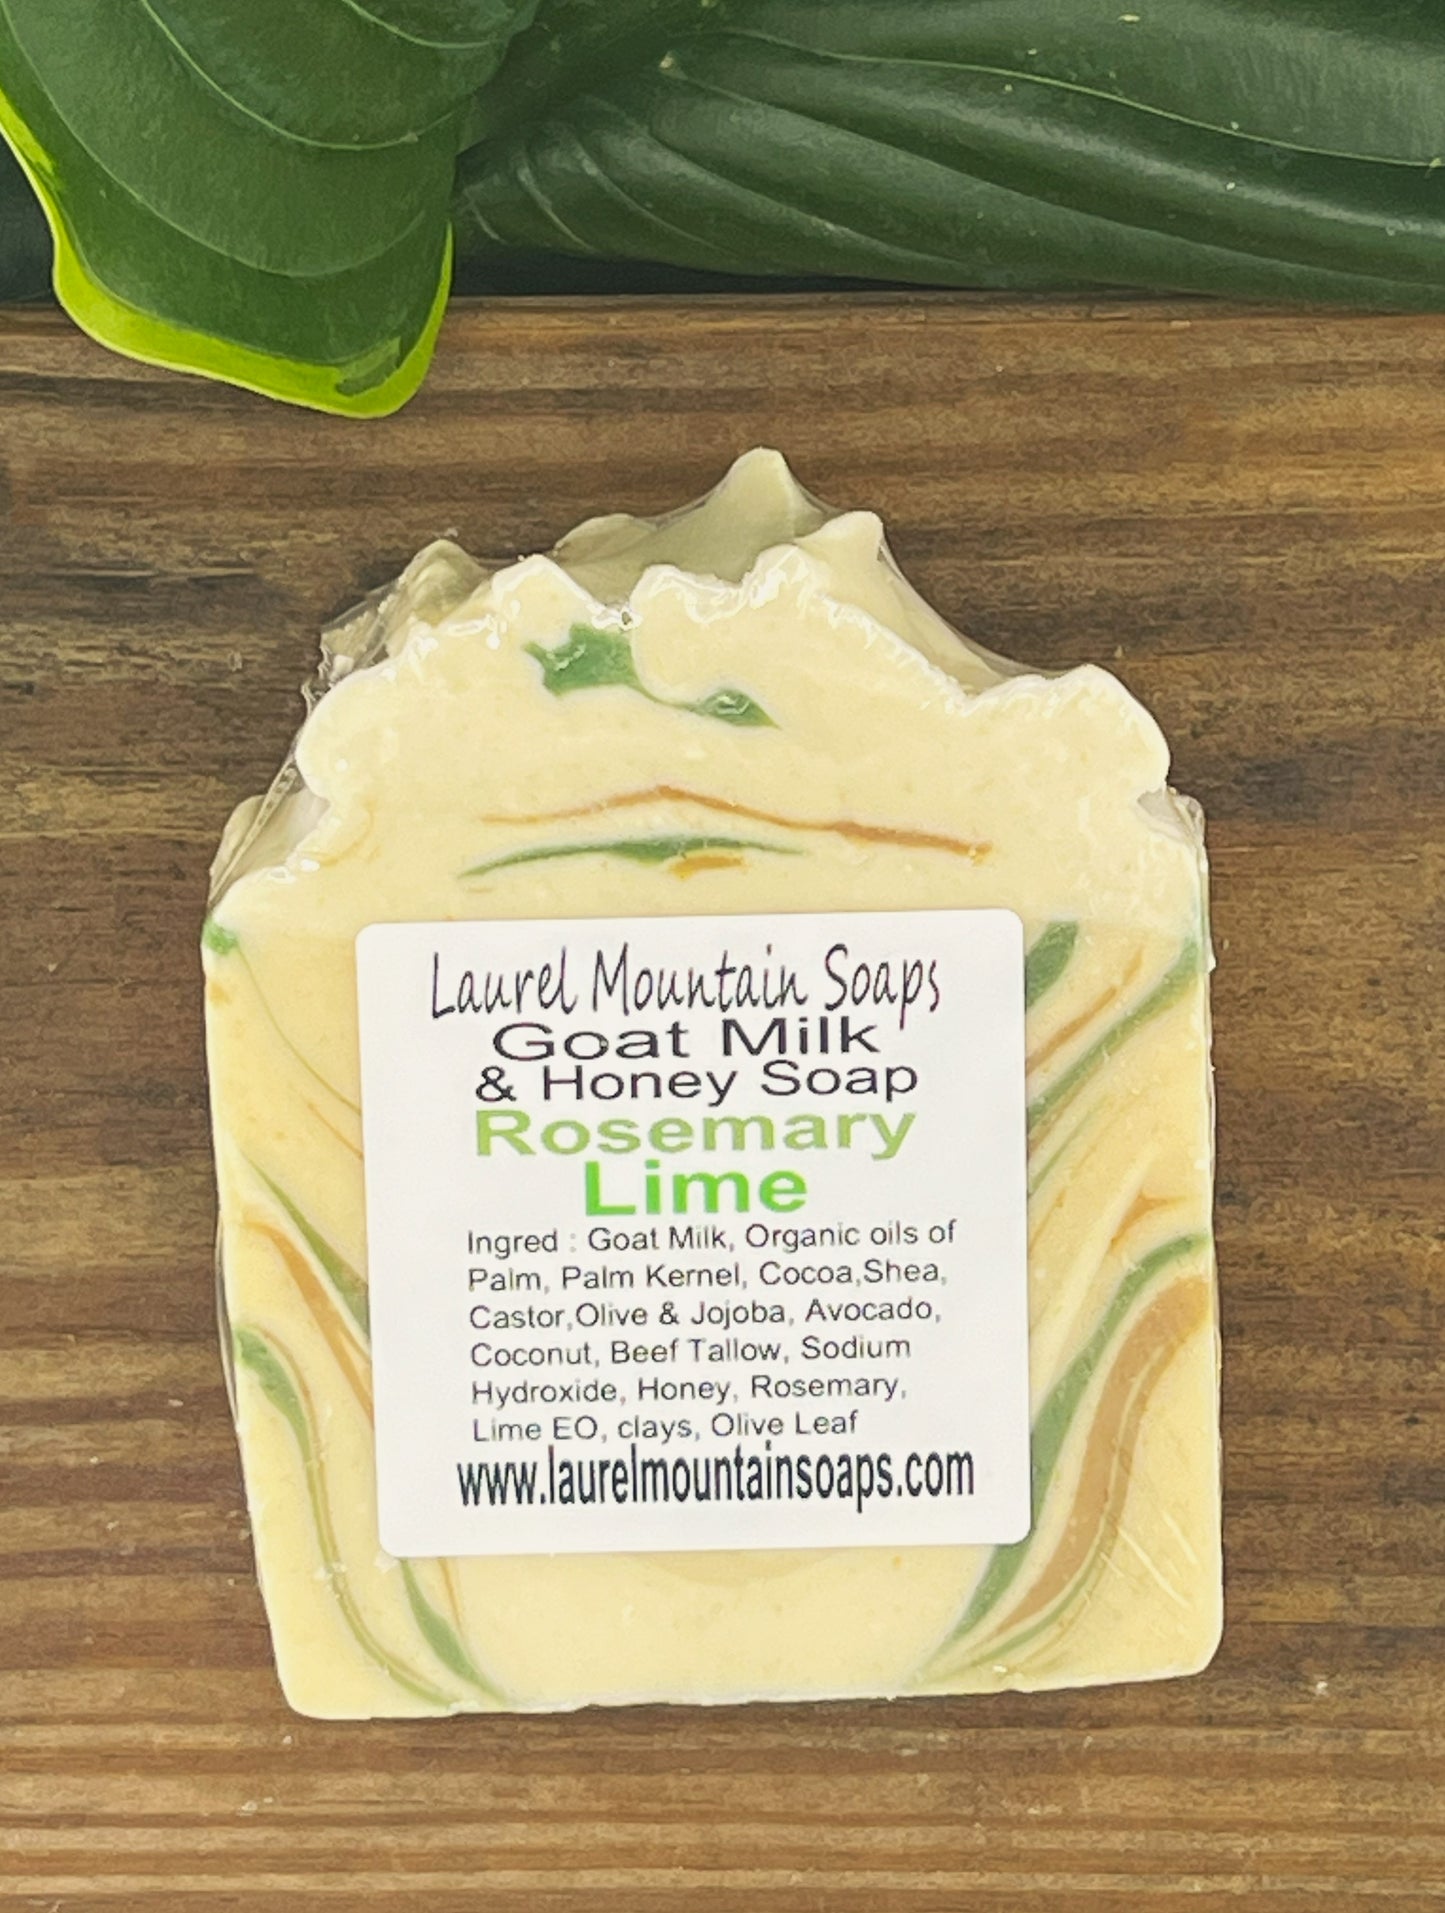 Rosemary Lime Goat Milk and Honey Soap